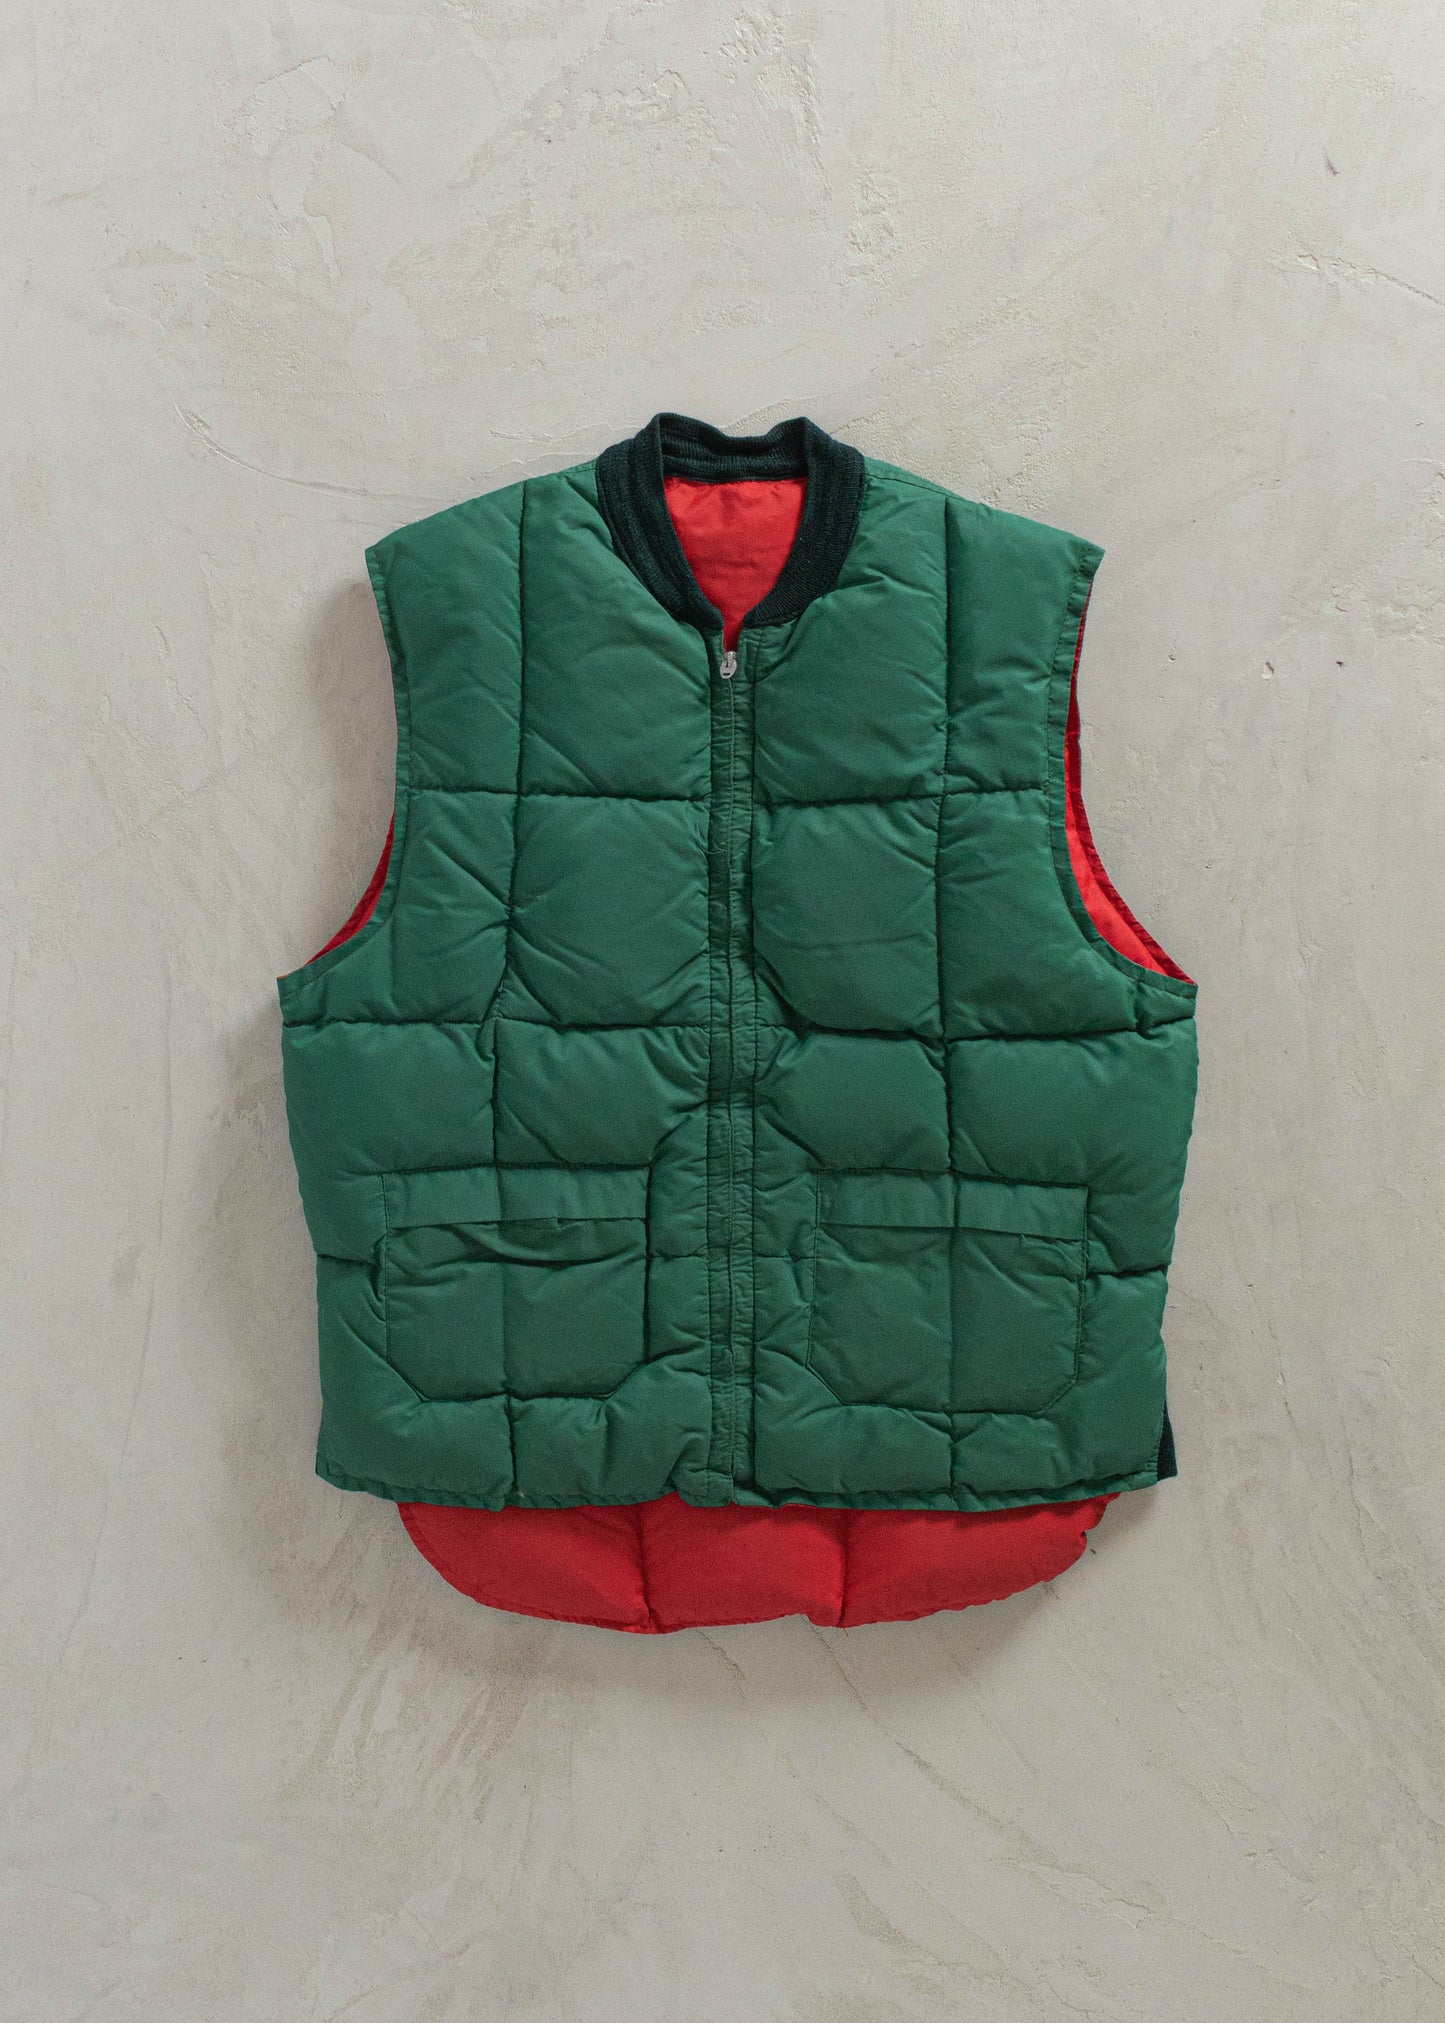 1980s Falcon Brand Reversible Nylon Down Puffer Vest Size S/M